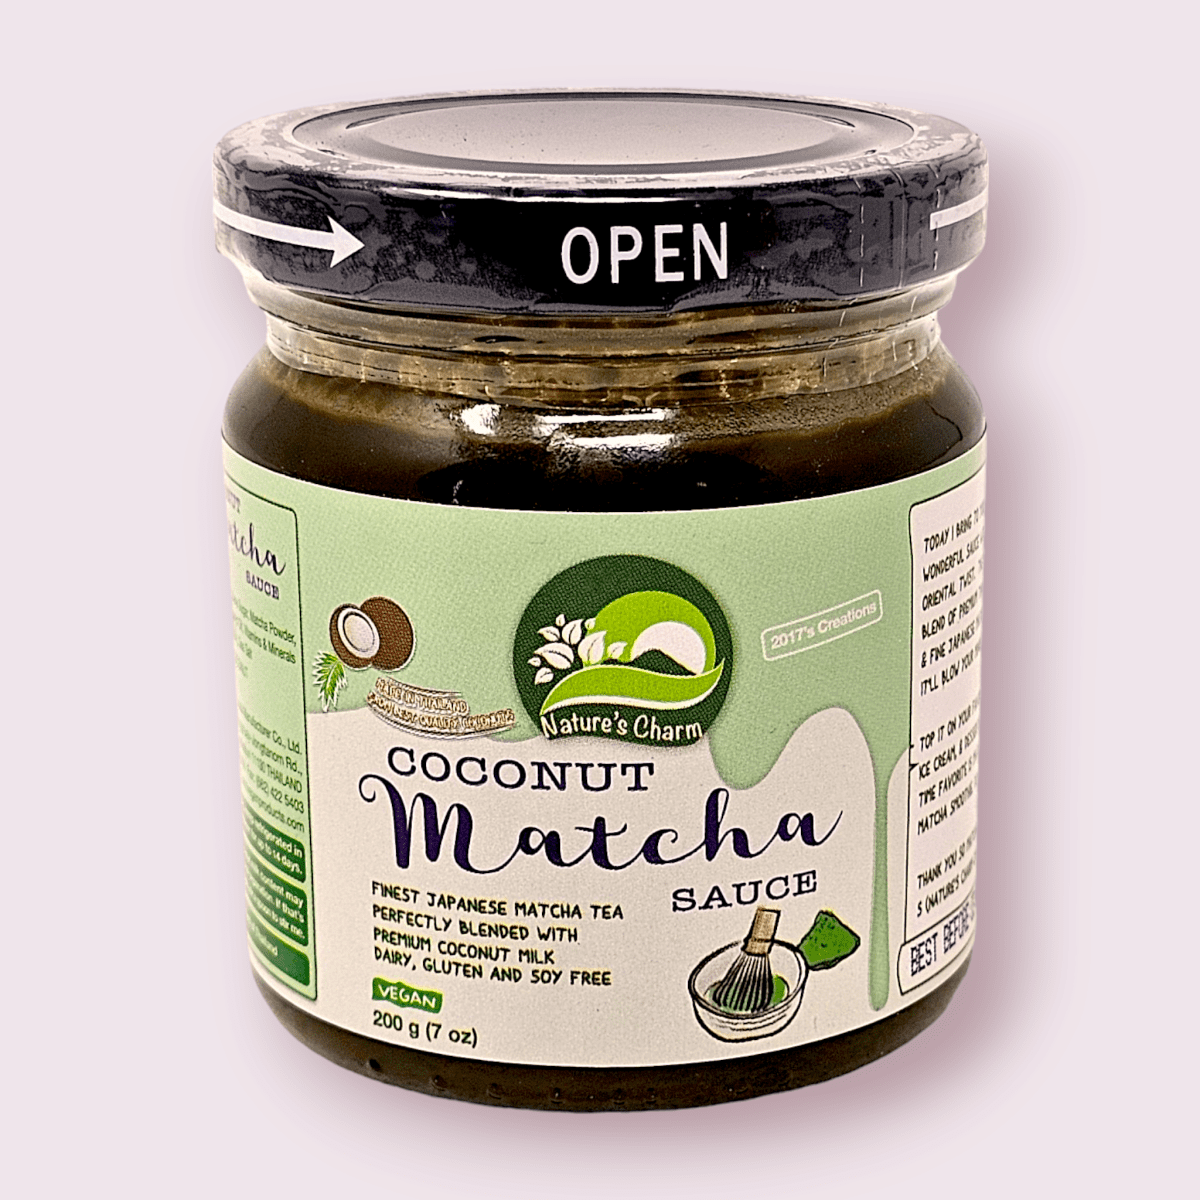 Nature’s Charm Coconut Matcha Sauce (200g)